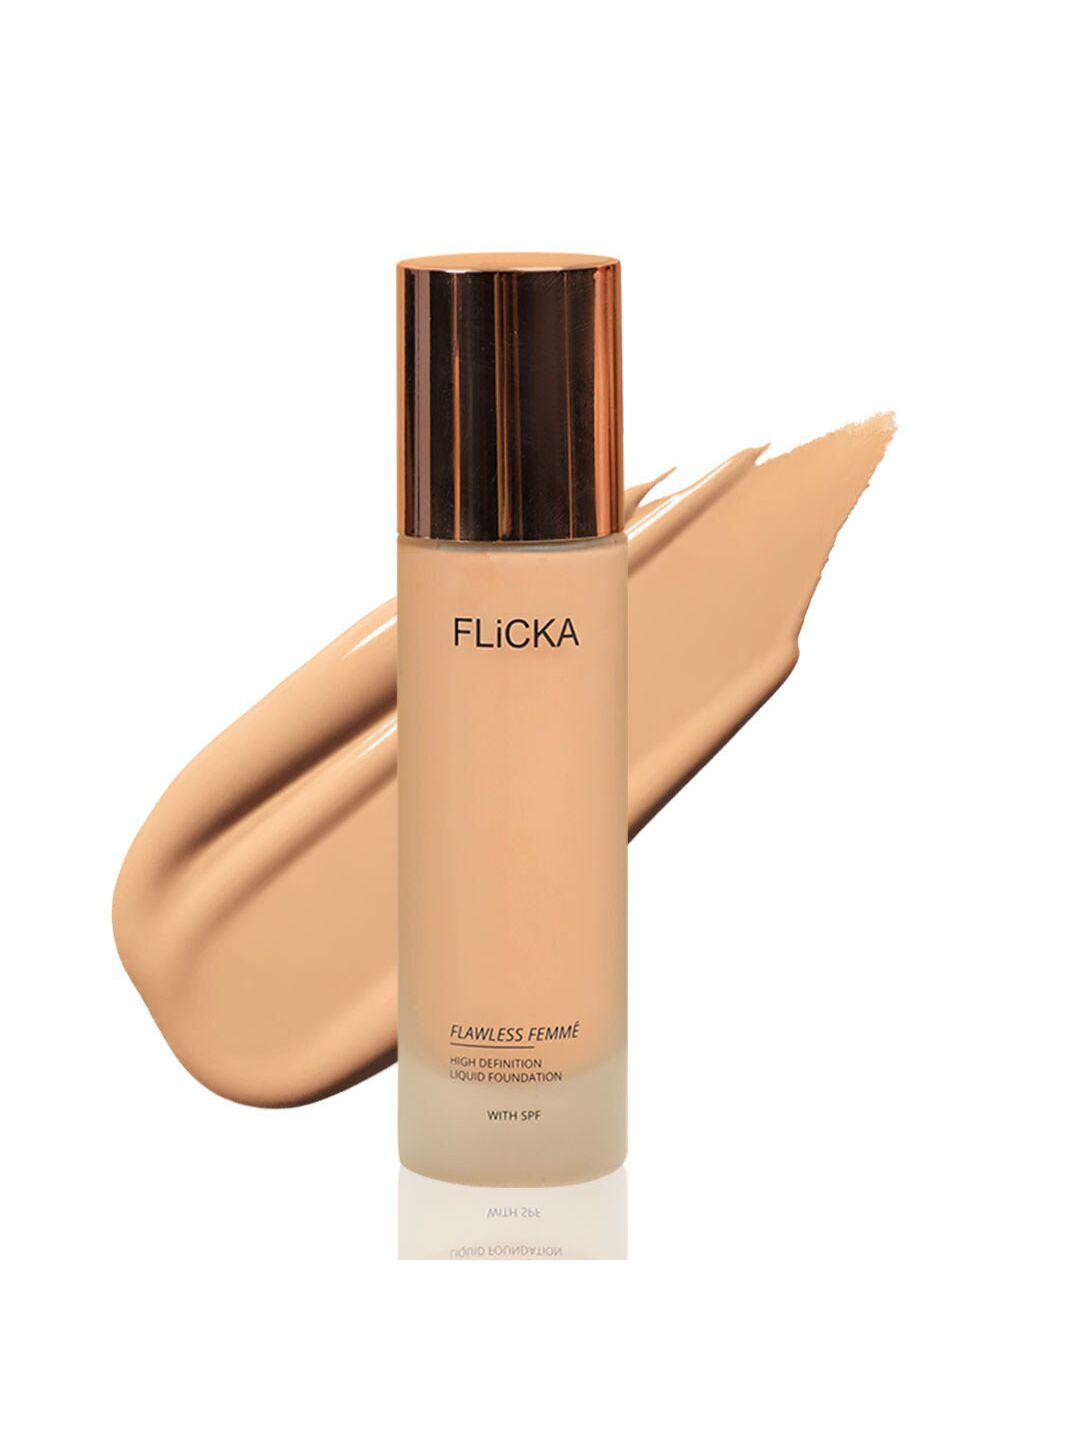 flicka flawless femme long lasting liquid foundation 30ml - warm ivory 03